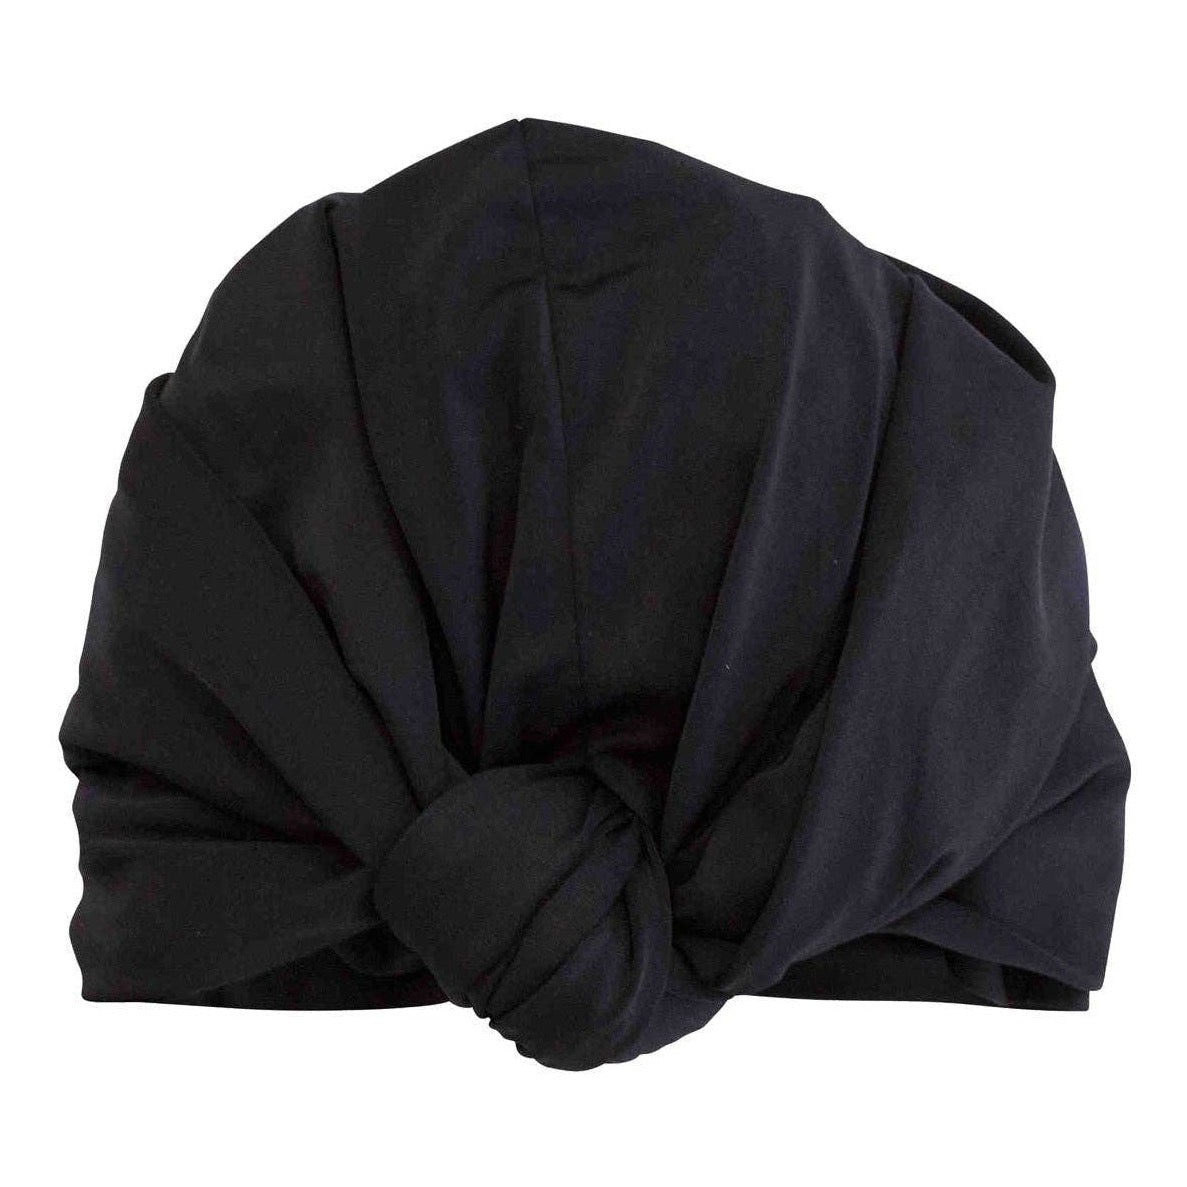 DAHLIA shower cap in Black by Louvelle